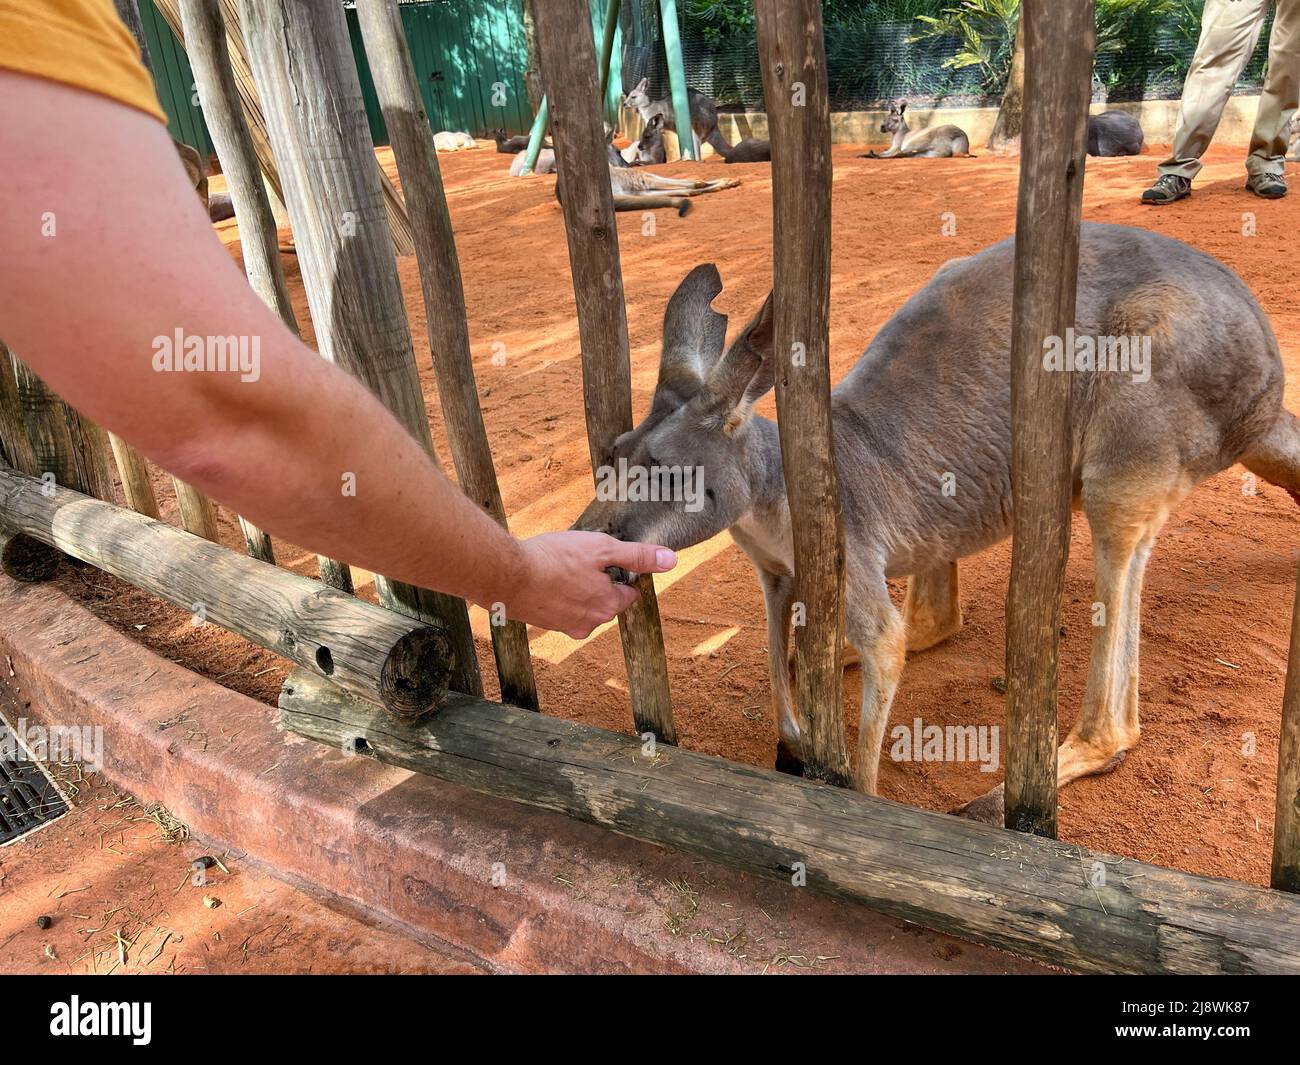 A person feeding a cute hungry kangaroo at a zoo. Stock Photo